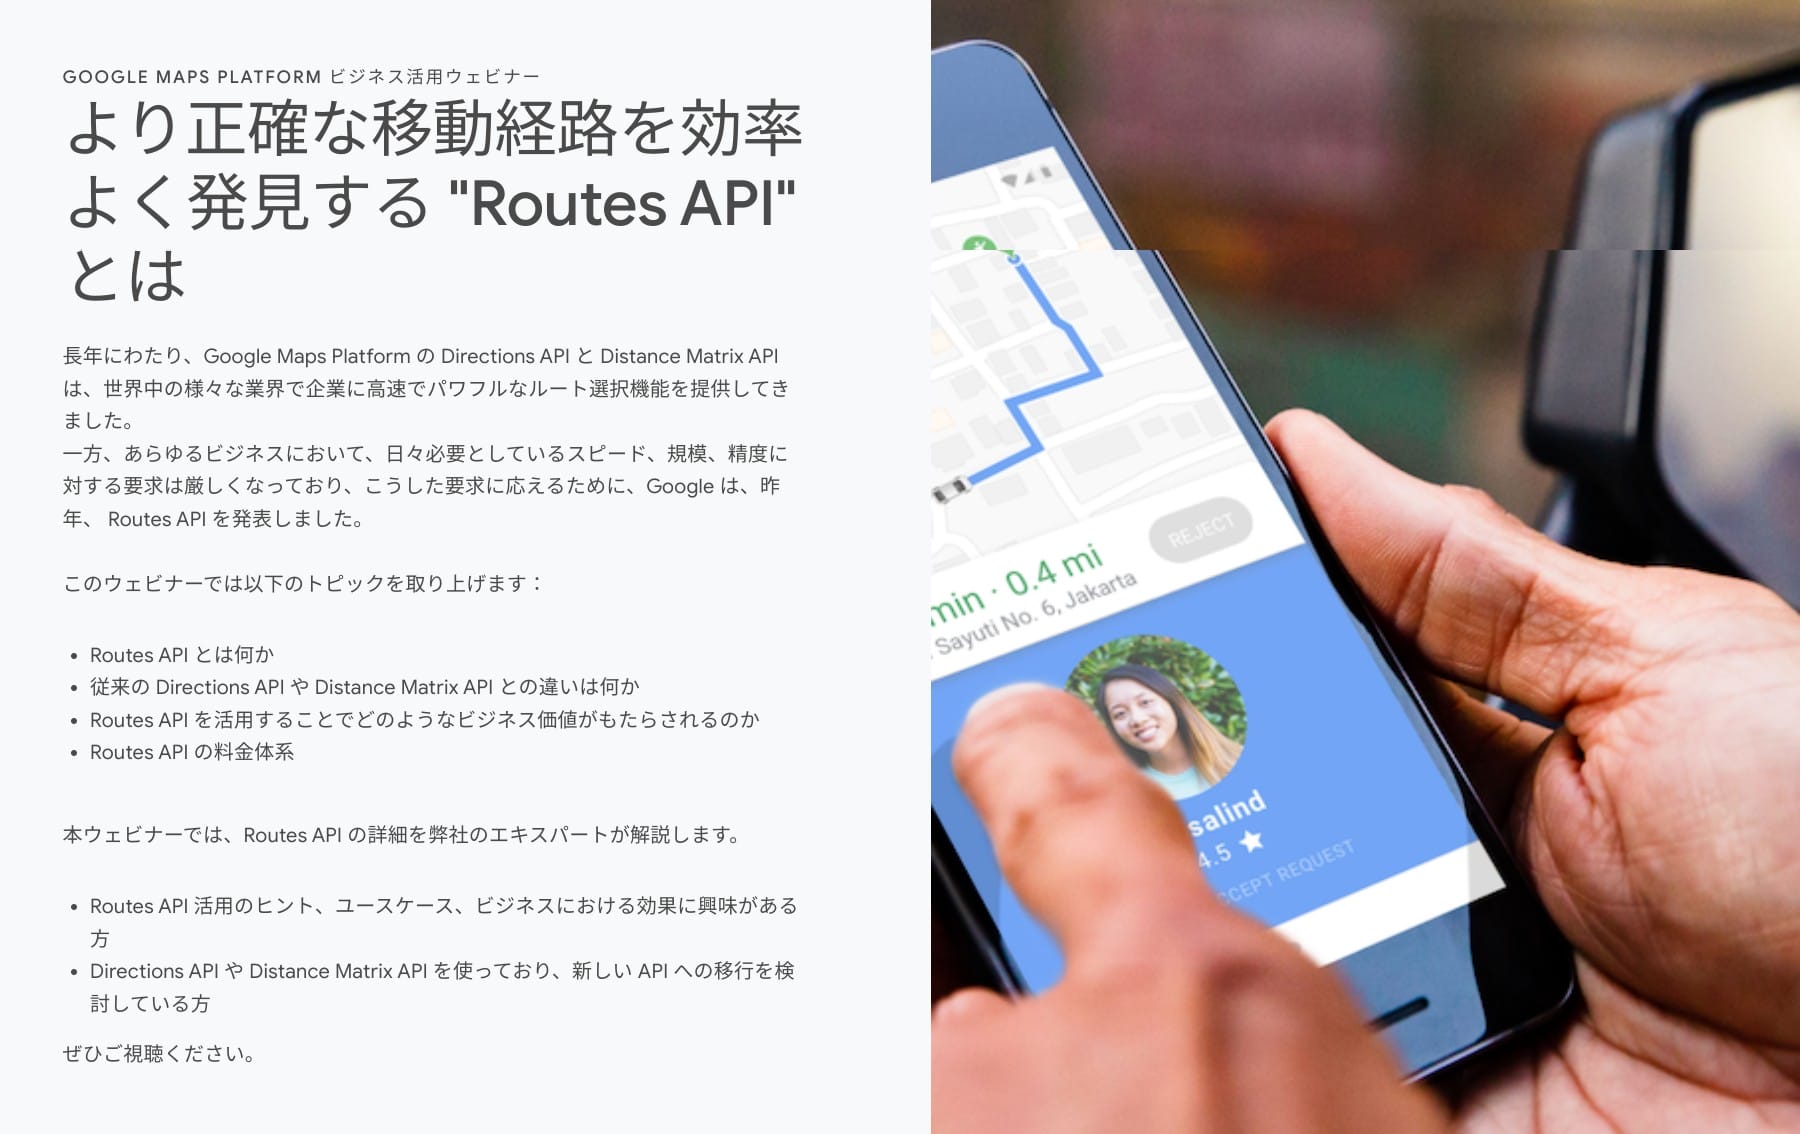 [Google Maps Platform] より正確な移動経路を効率よく発見する "Routes API" とは